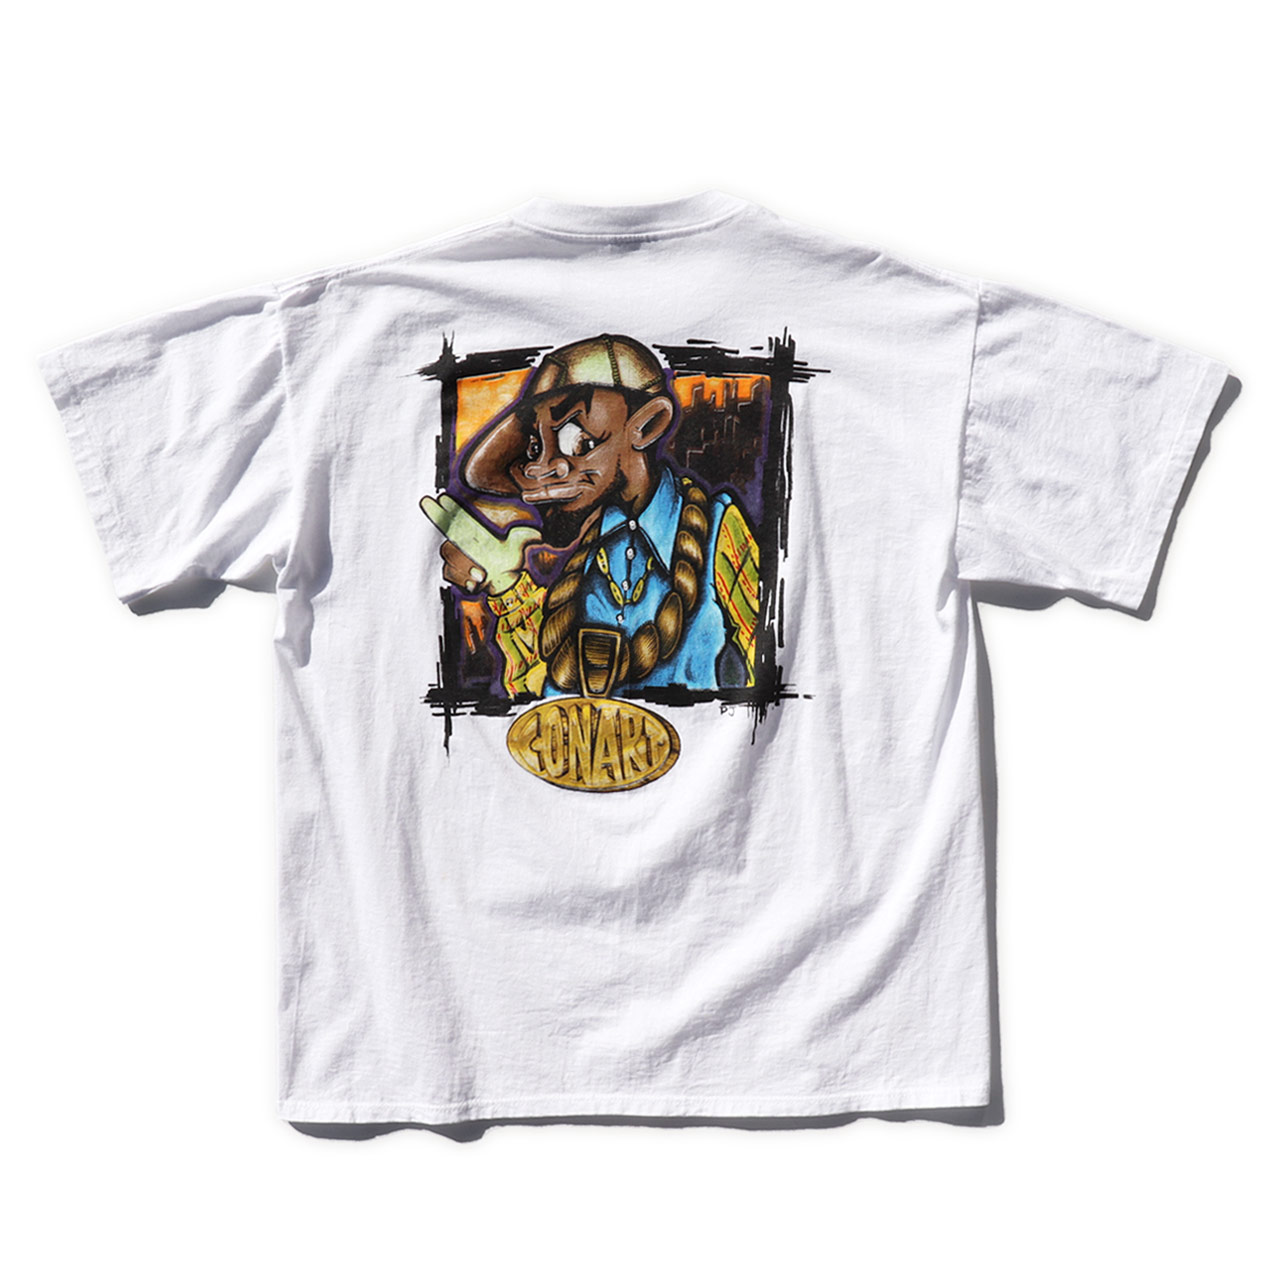 POST JUNK / 90's CONART グラフィティ プリントTシャツ [XL]